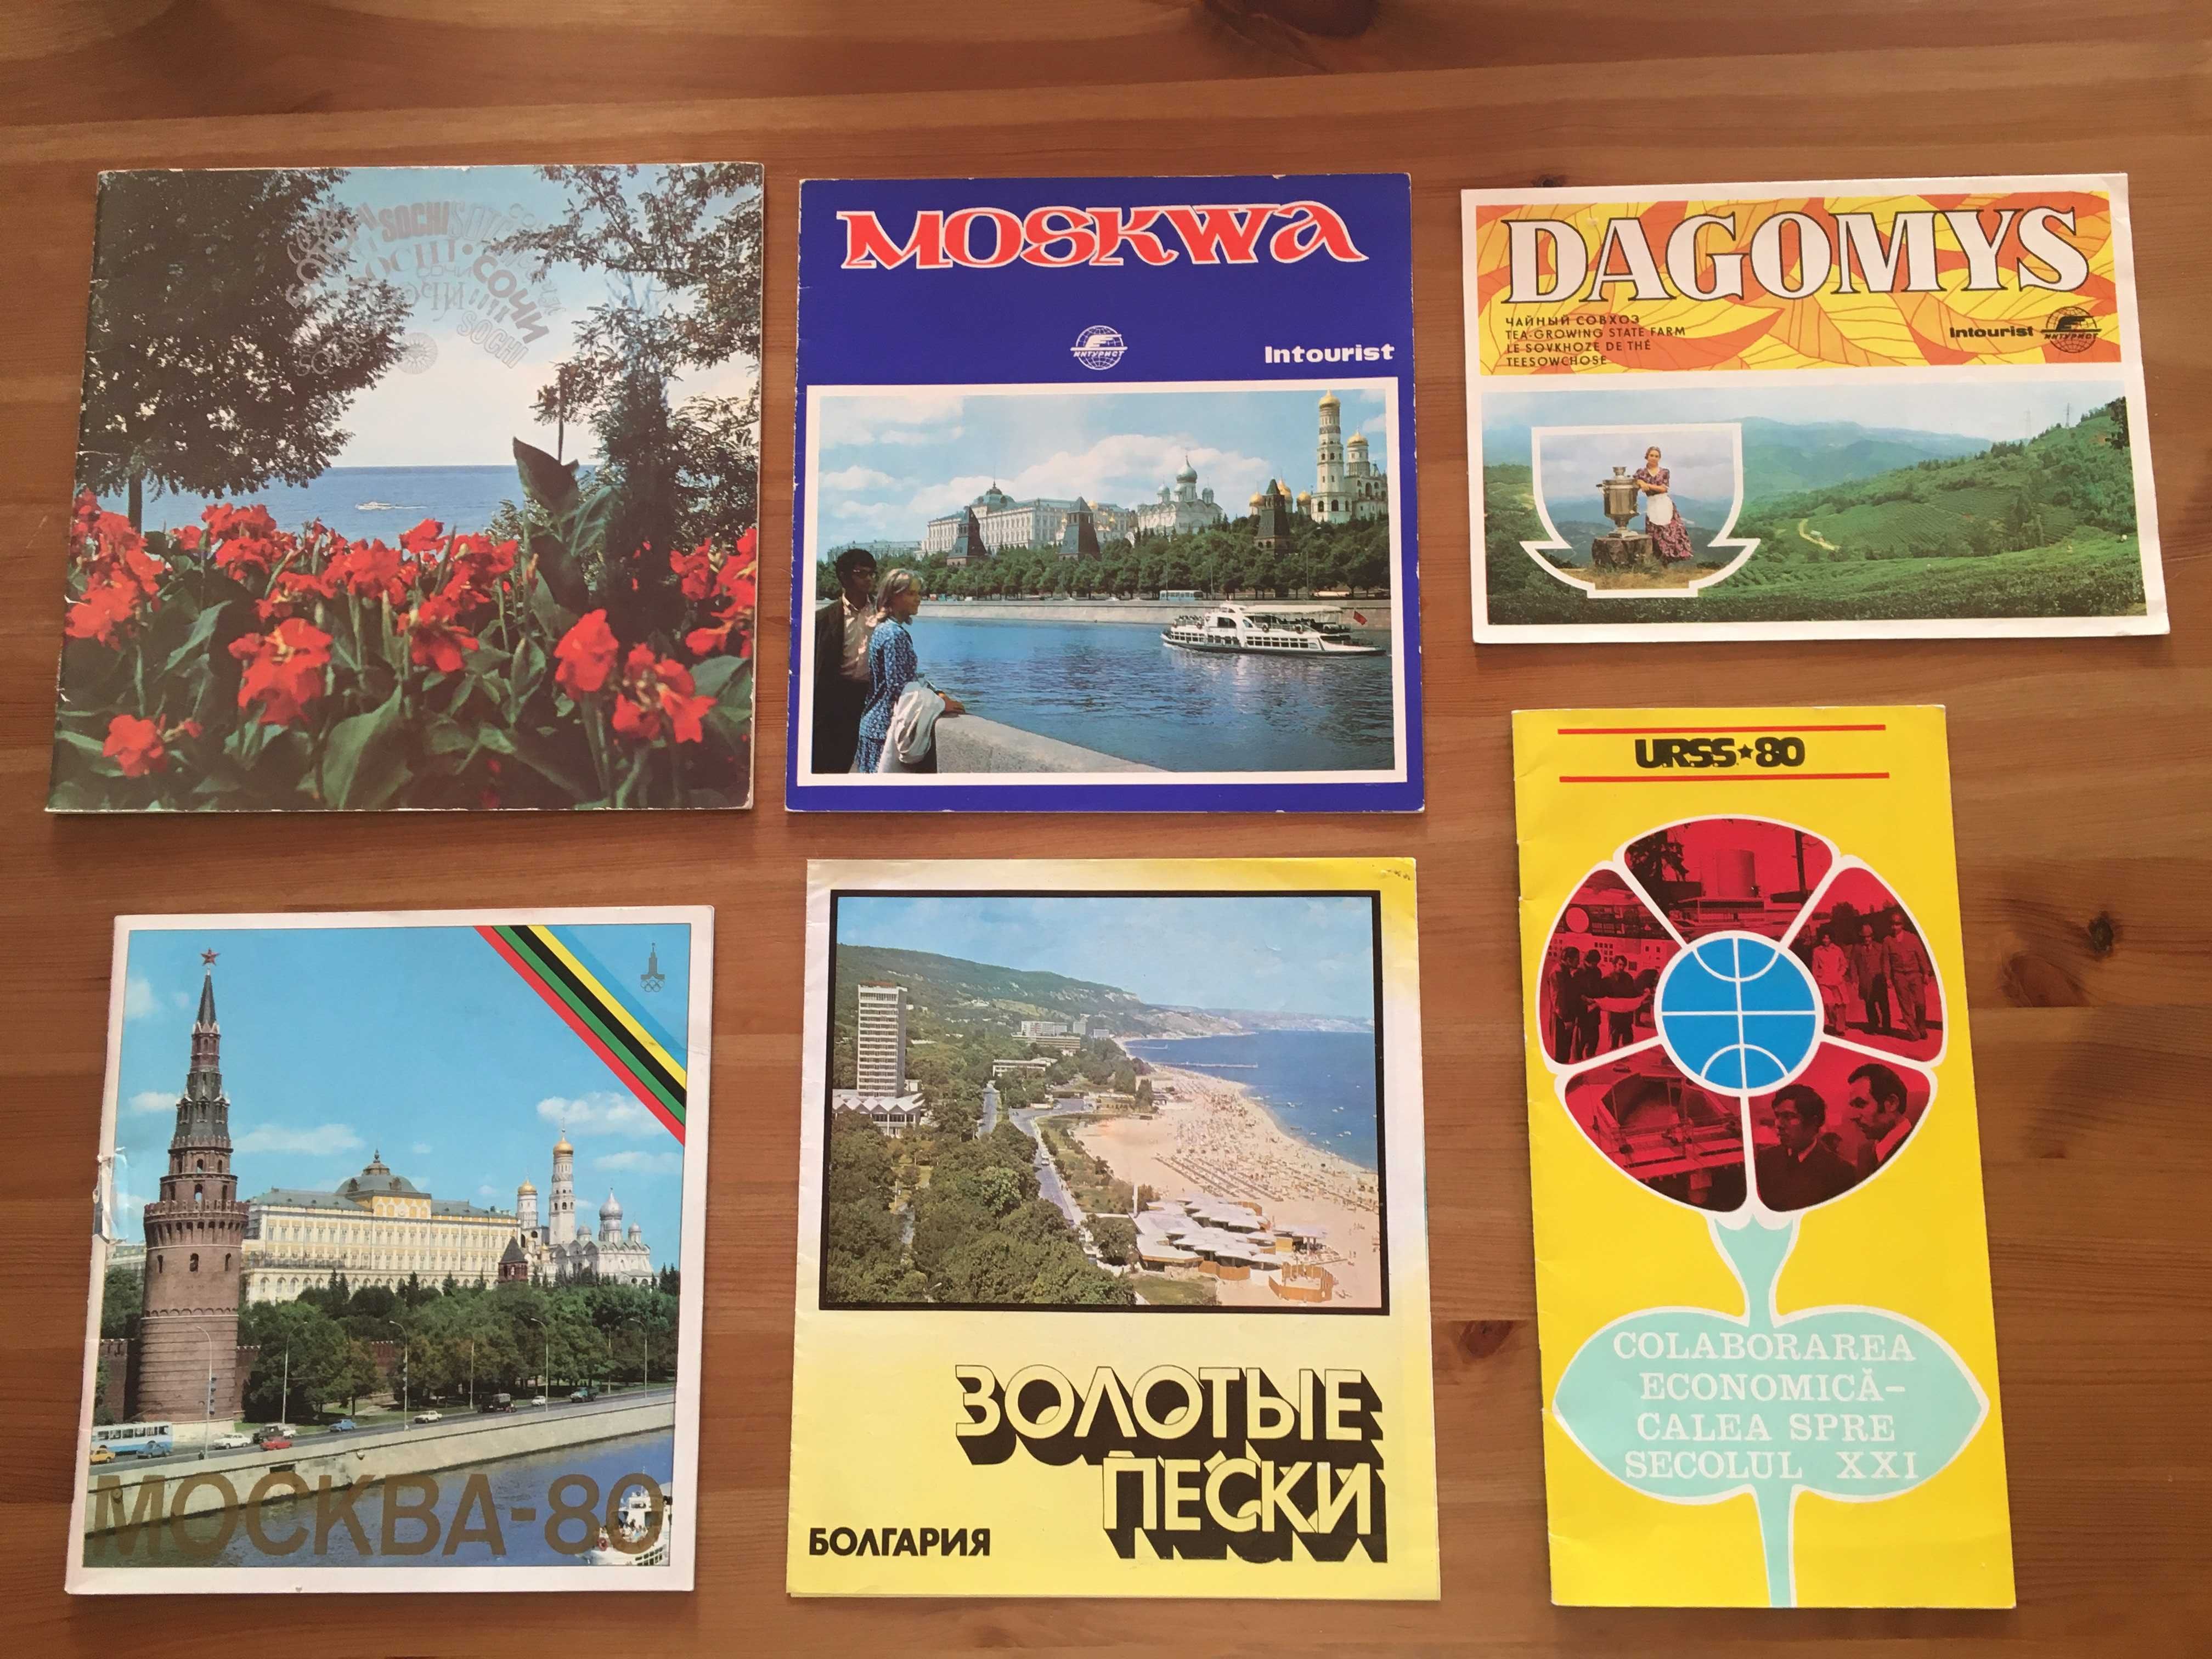 Stare foldery biur podróży lata 80 ZSRR